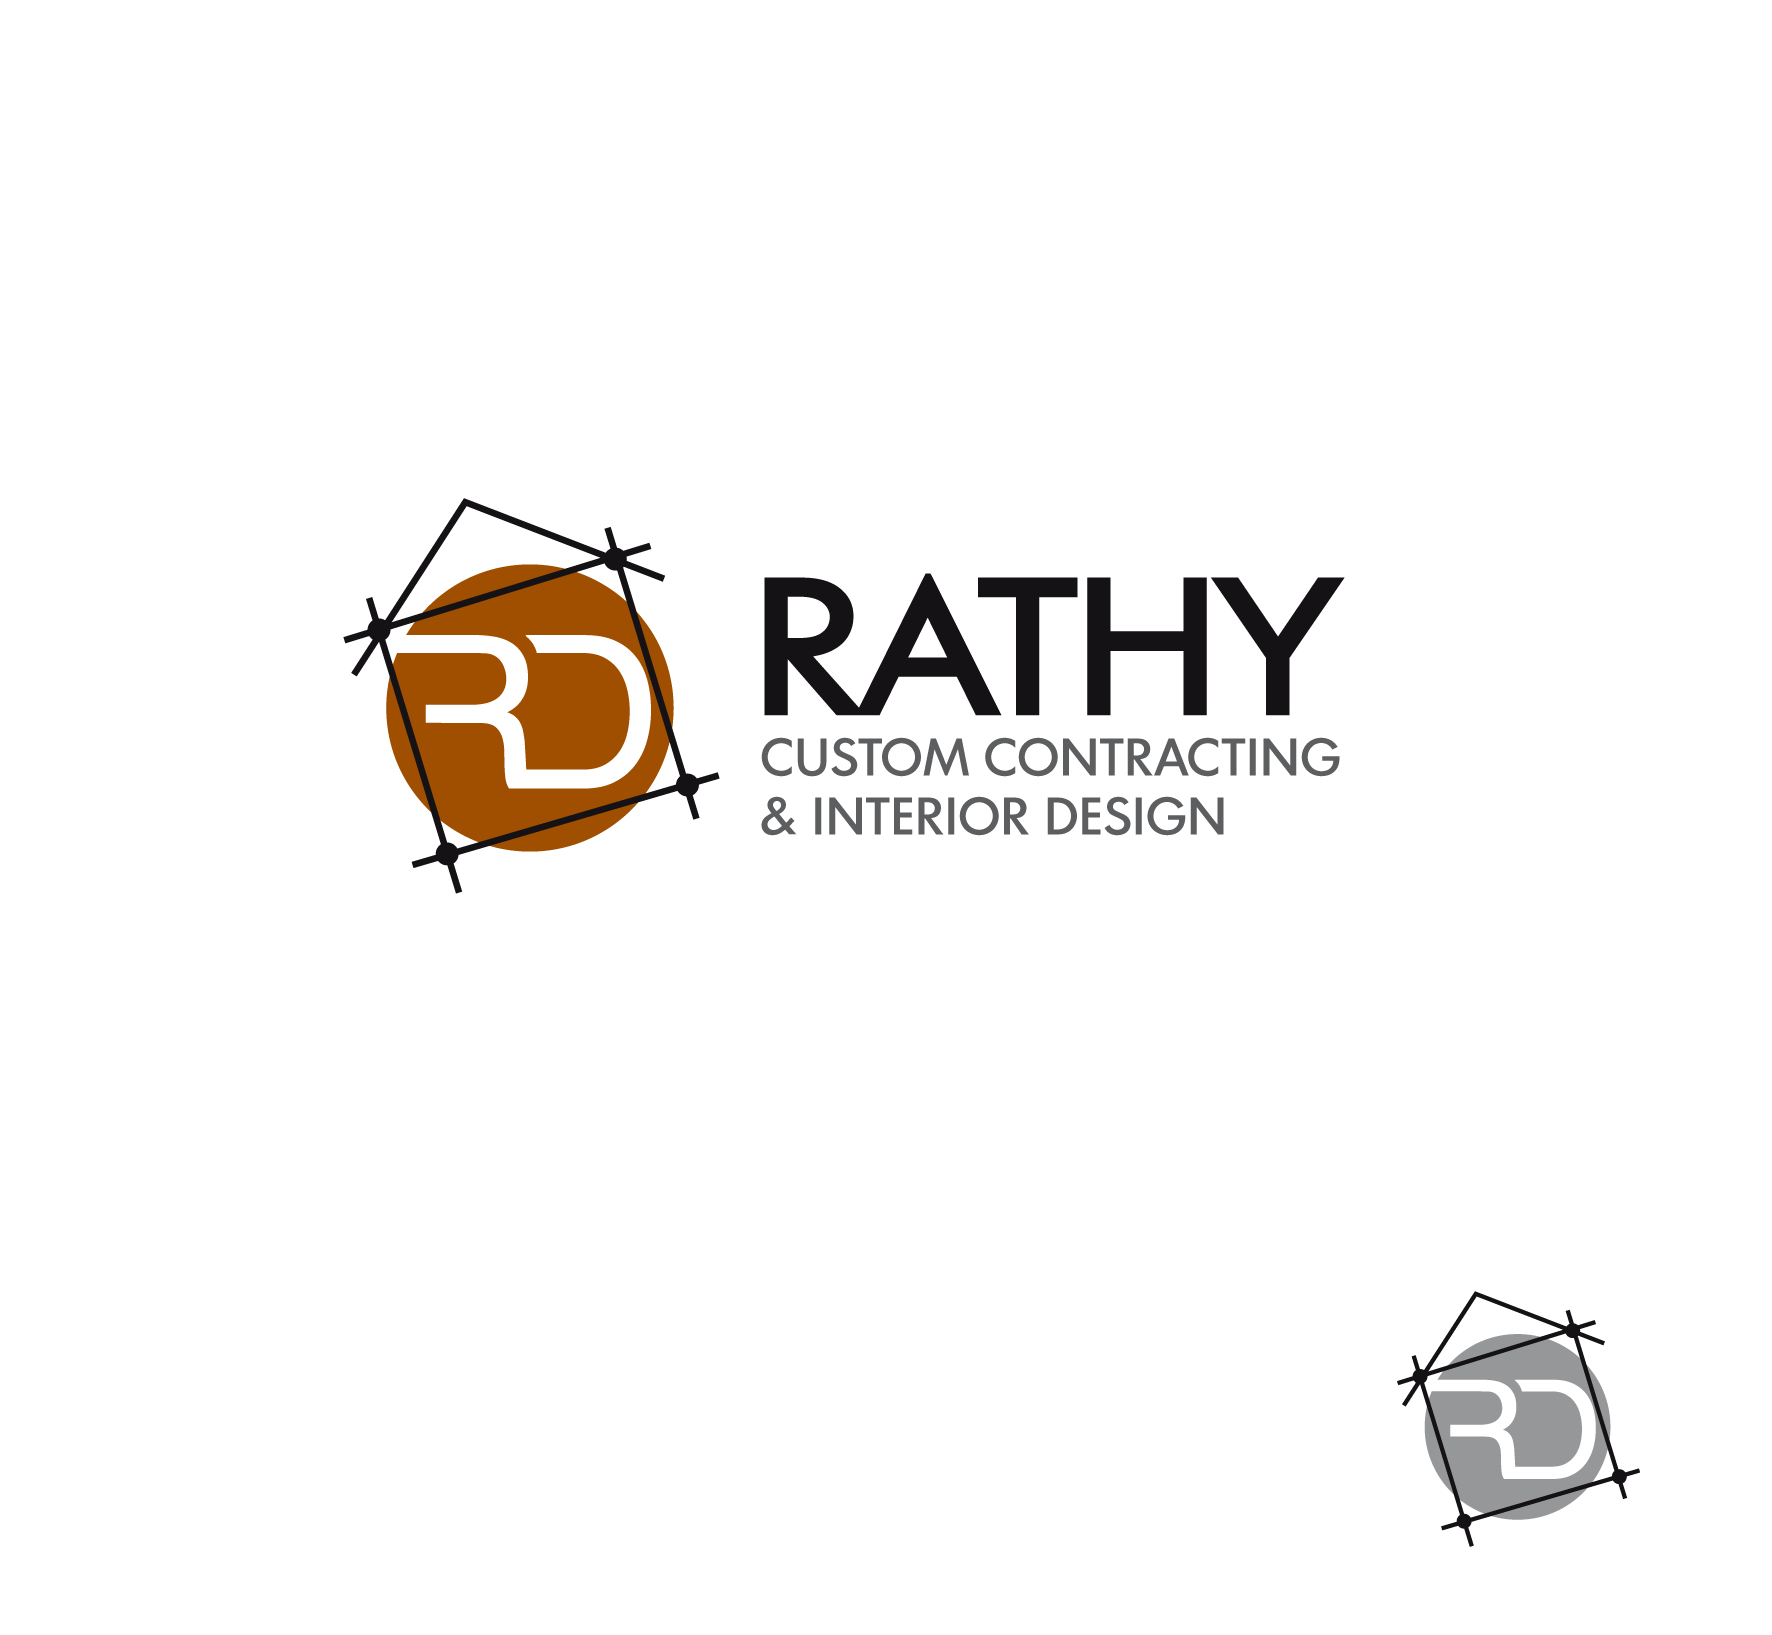 Decor Company Logo - Logo Design Needed for Exciting New Company Rathy Custom Contracting ...